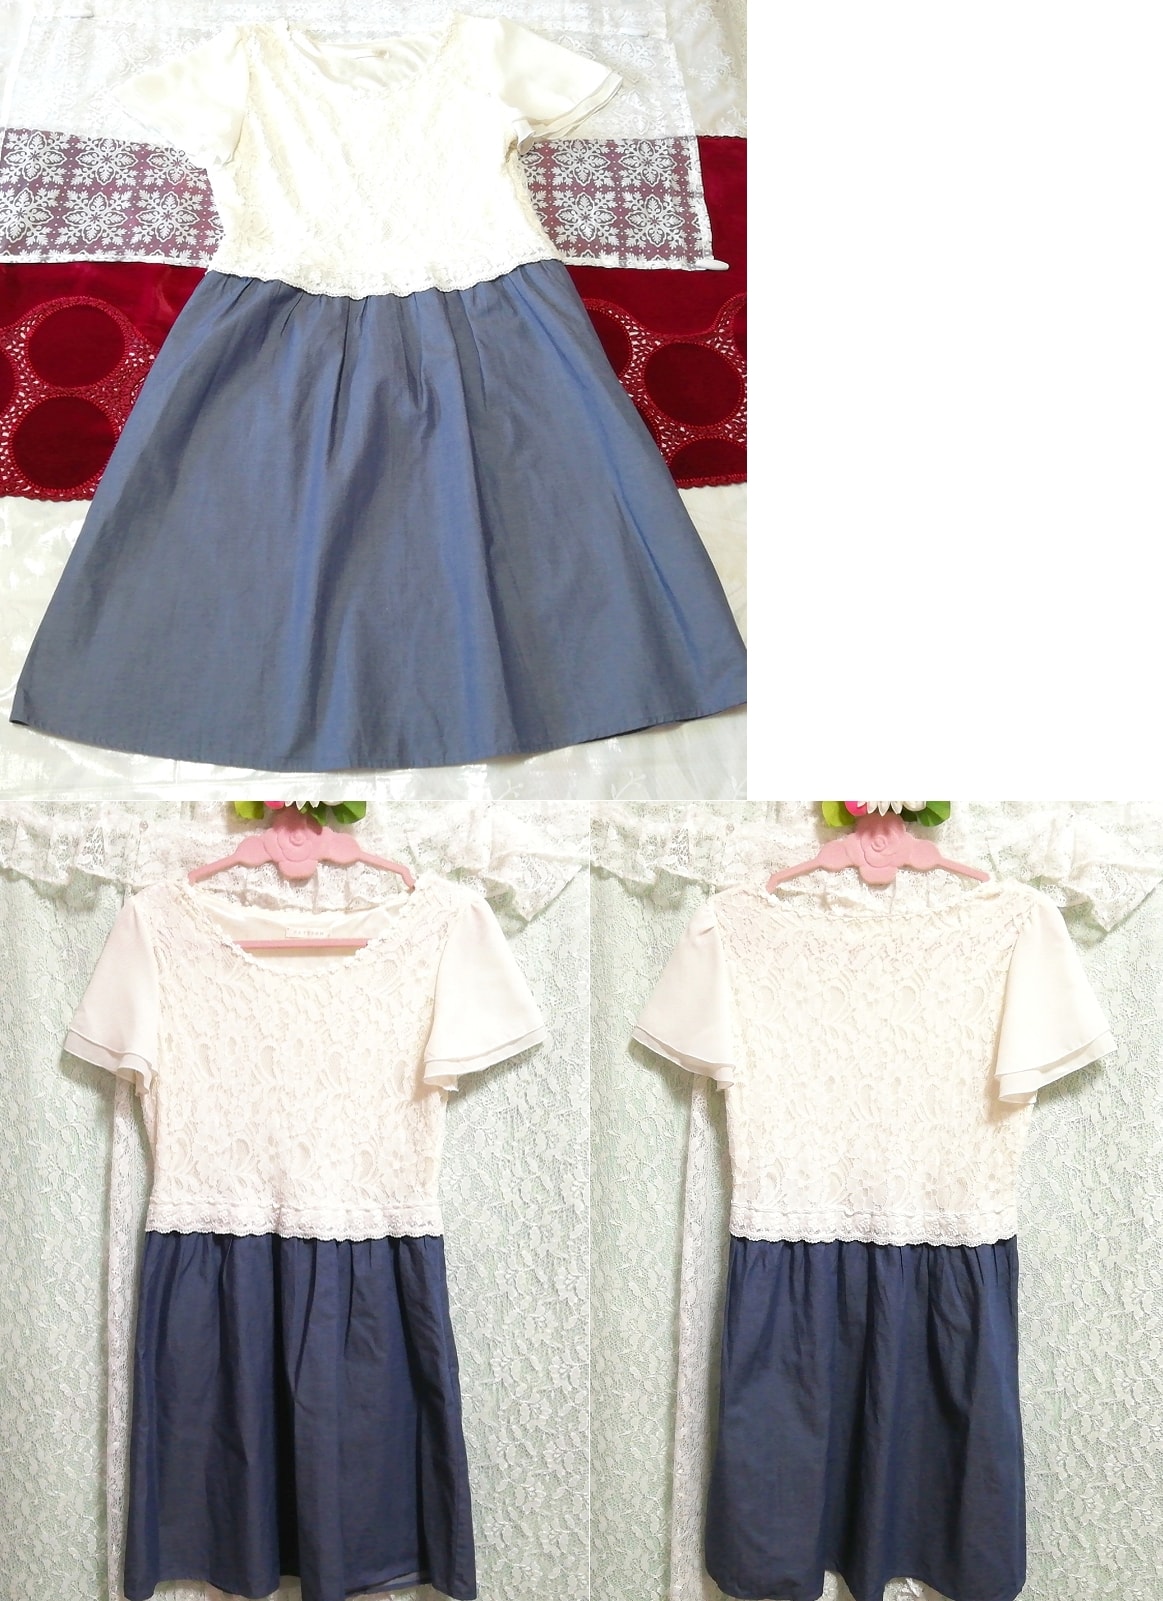 White lace short sleeve tunic denim style skirt negligee nightgown nightwear dress, tunic, short sleeve, m size